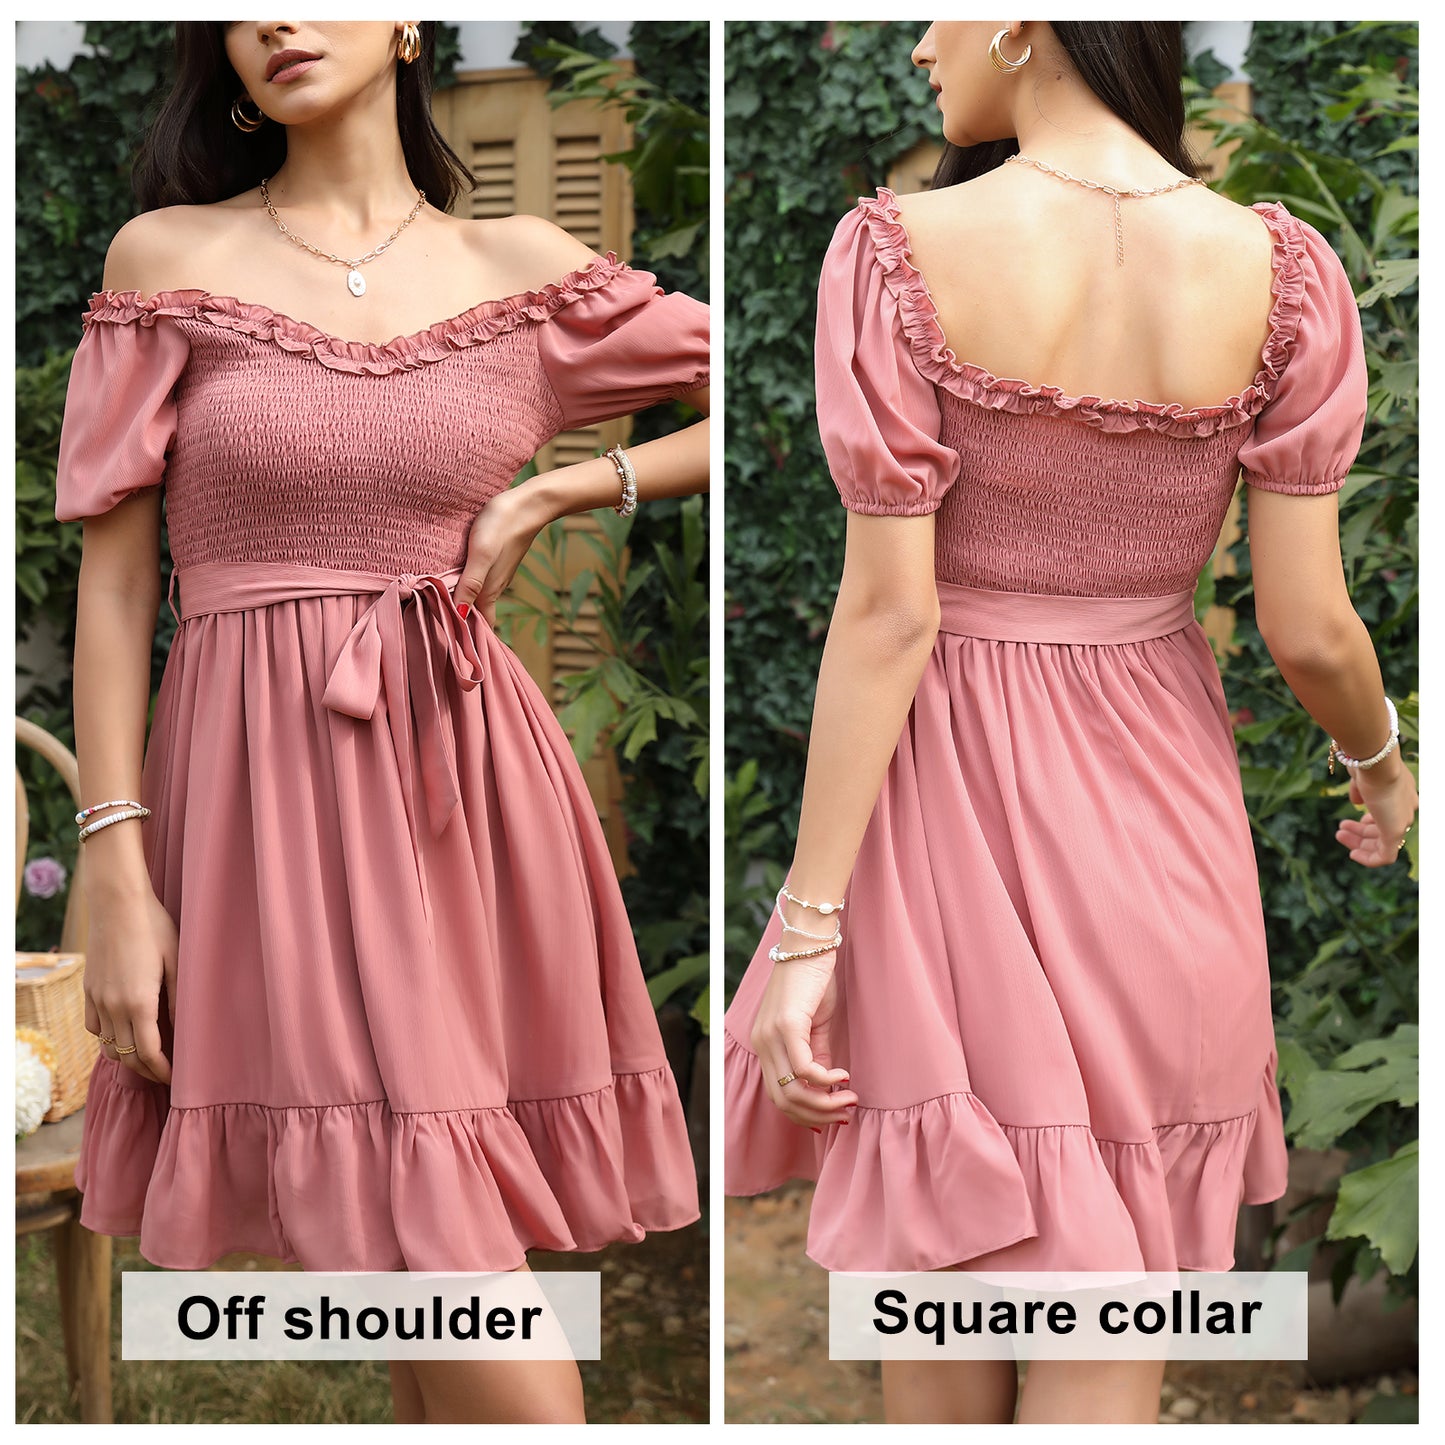 Exlura Women’s Sweetheart Neckline Ruffle Dress Smocked Belted Short Puff Sleeve Tie Waist Mini Dress Sundress